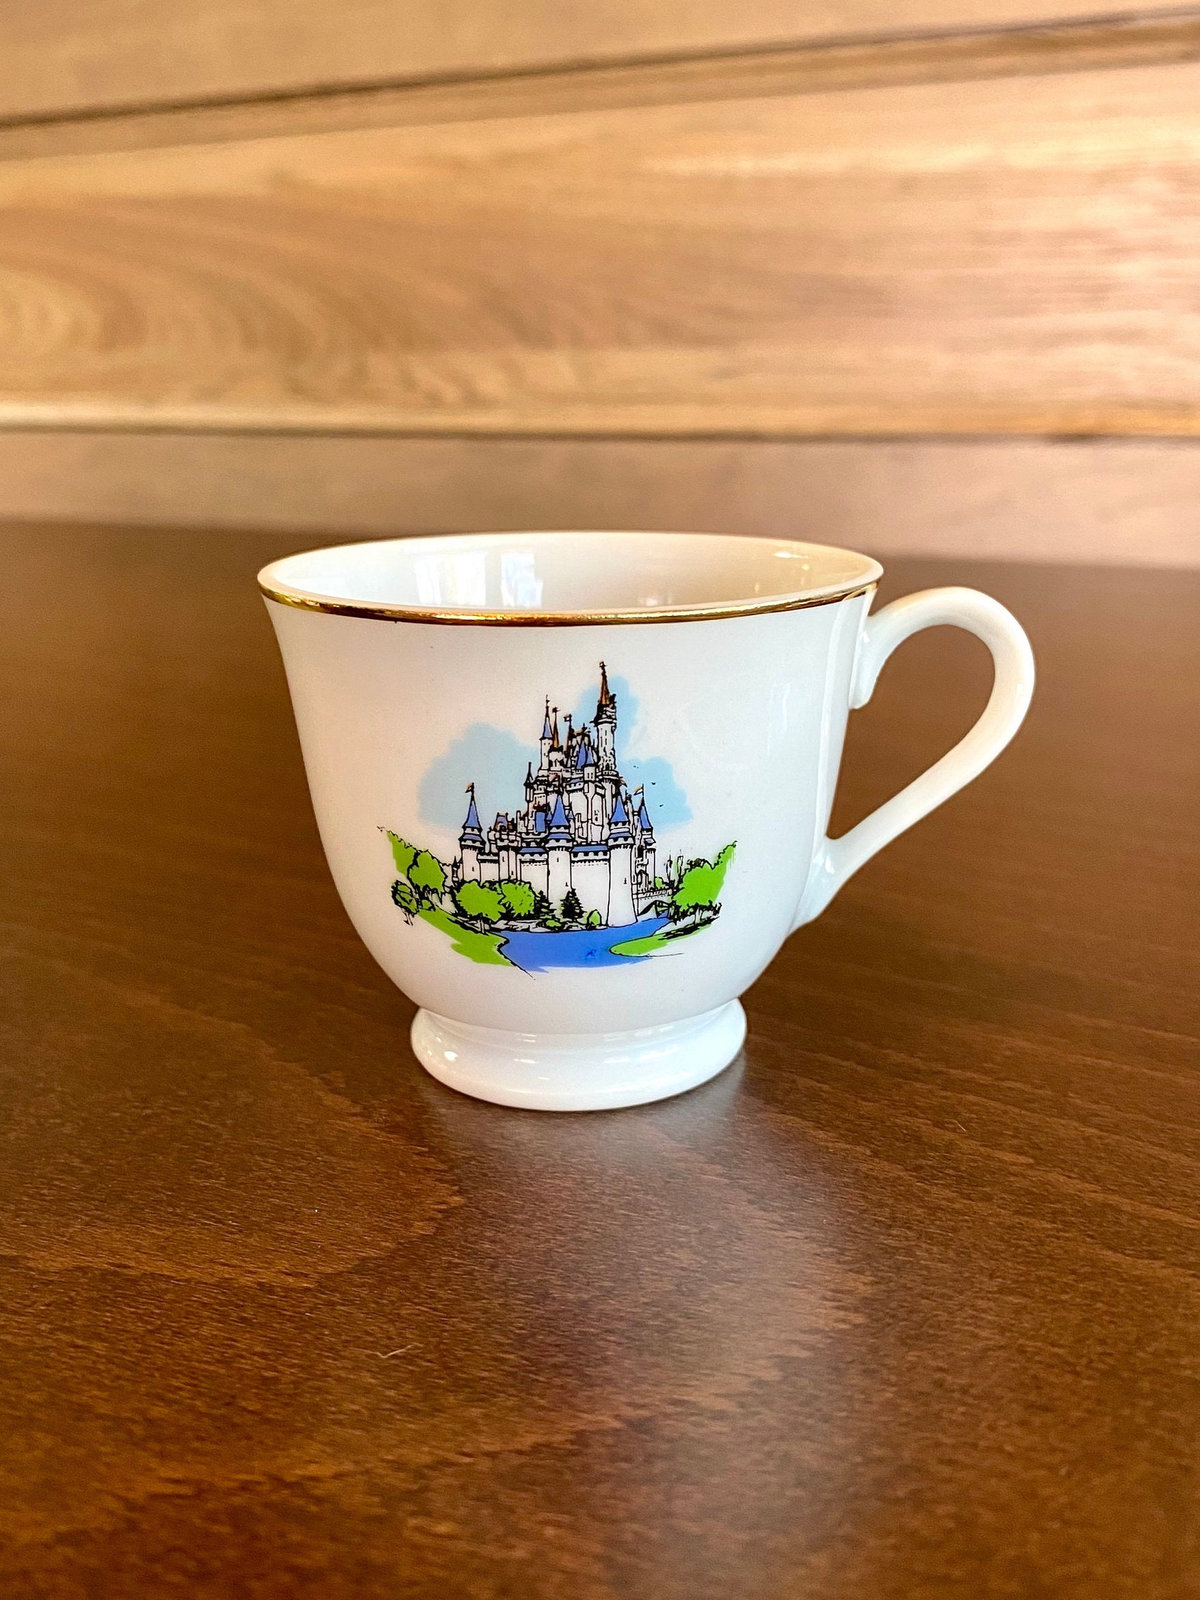 Vintage Disney Castle Tea Cup - $14.00